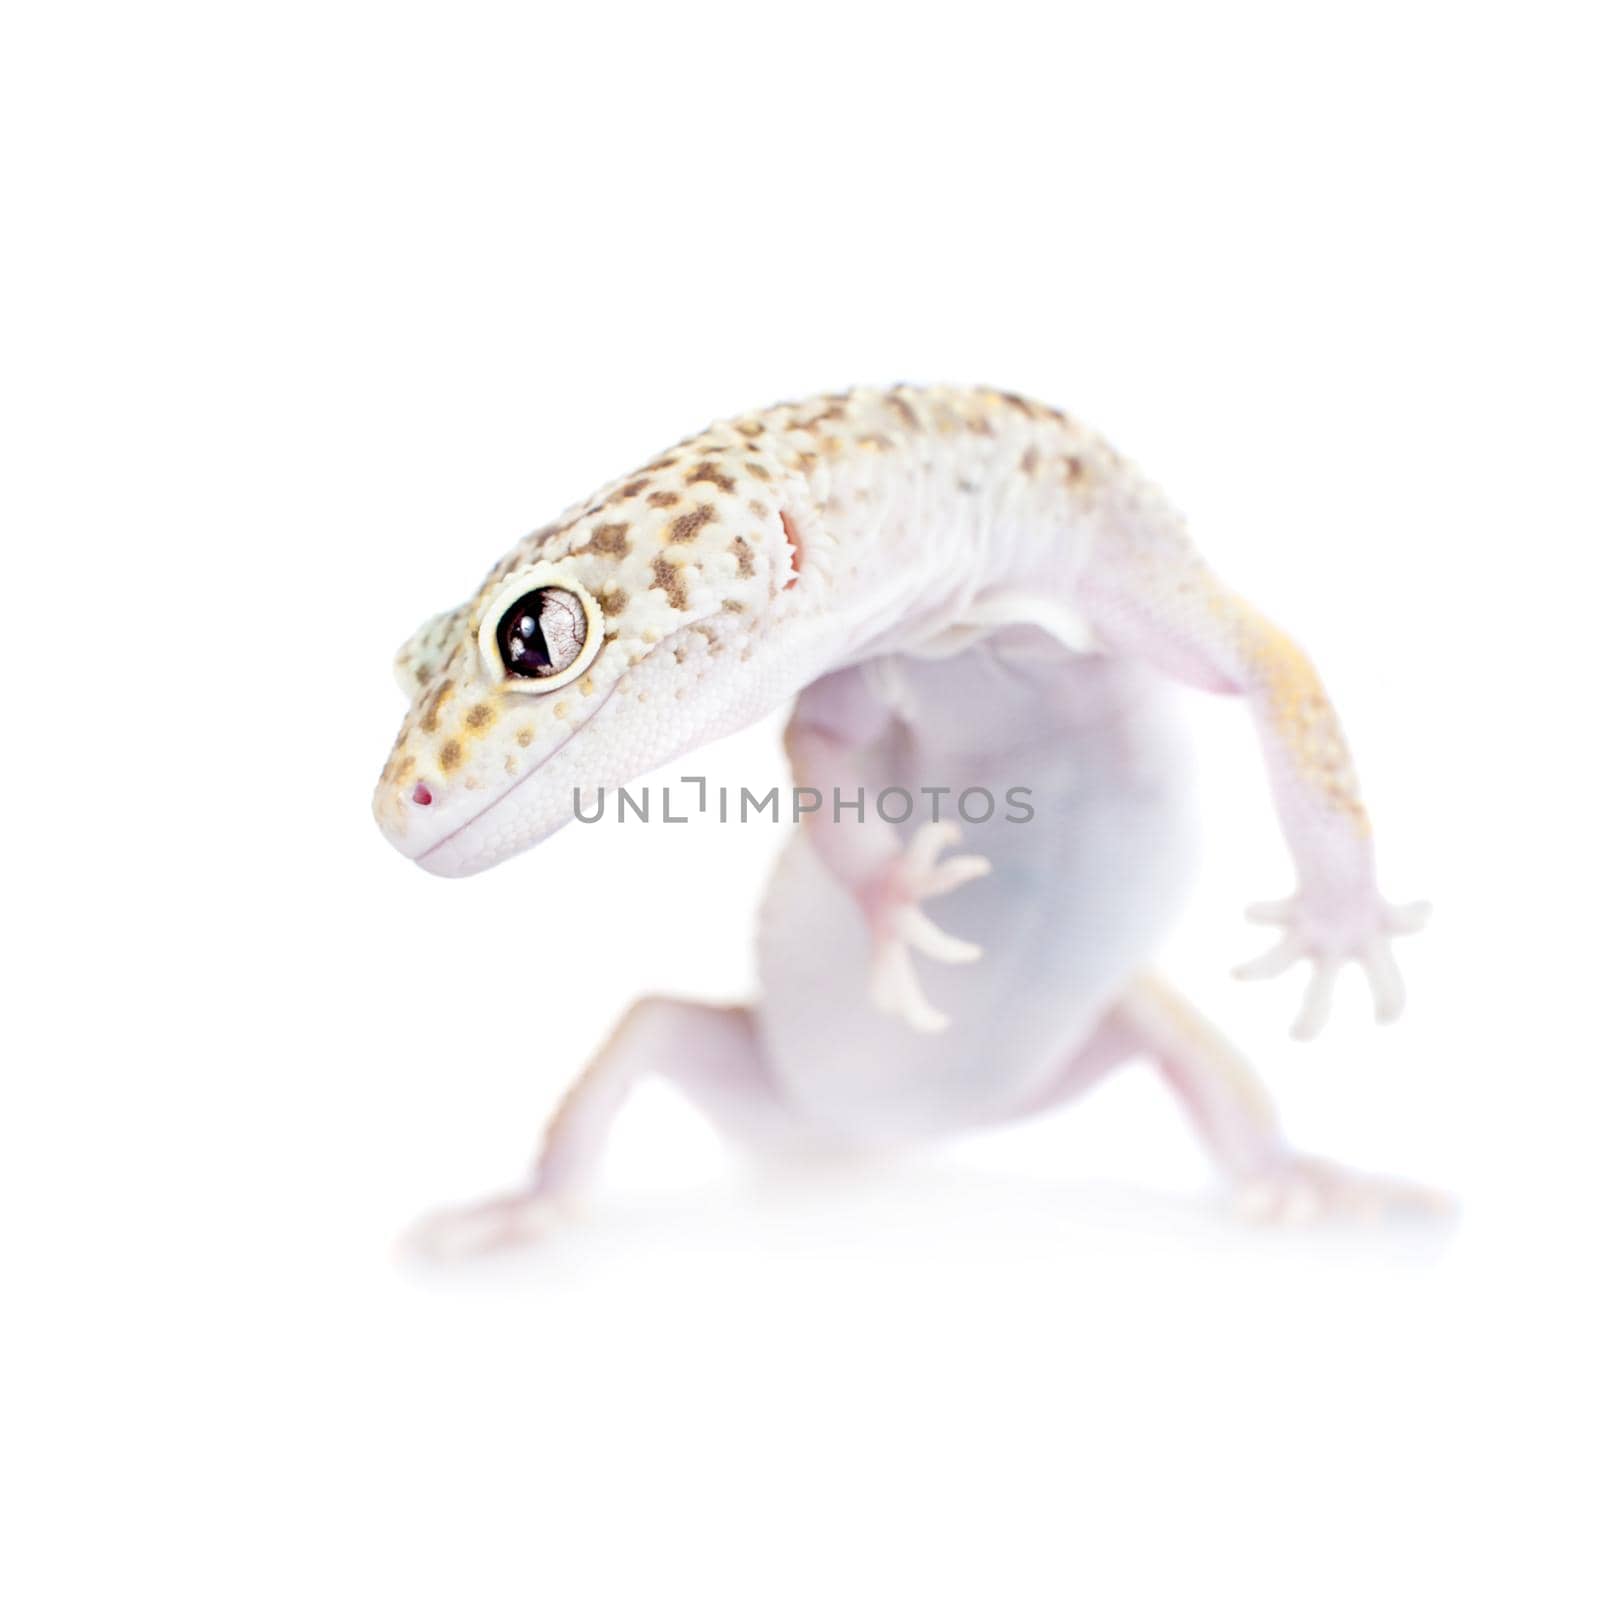 Tangerine Tremper Leopard Gecko on a white background